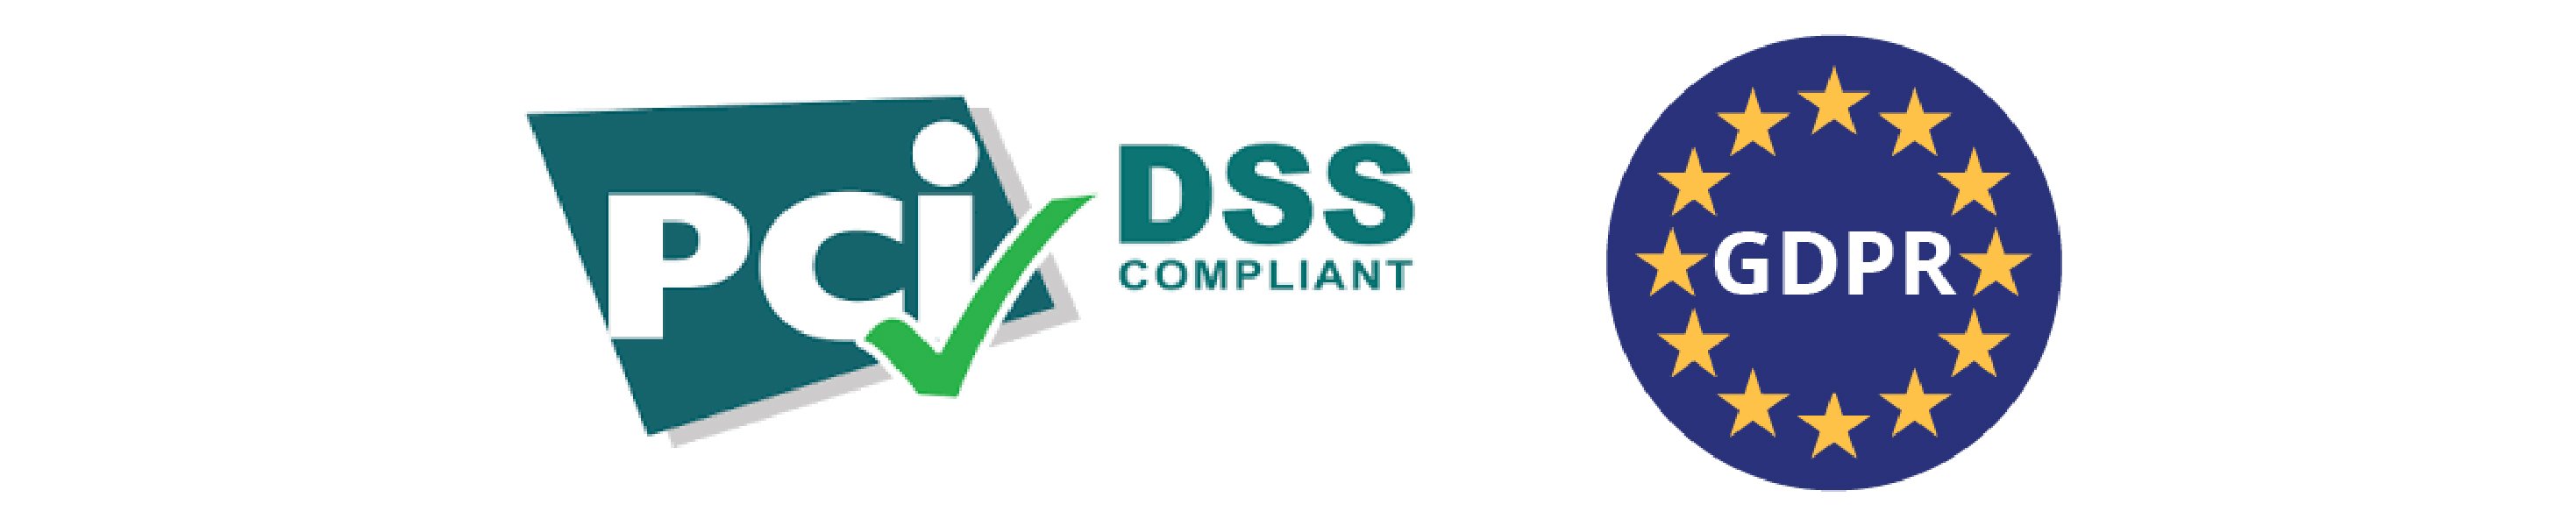 Compliance Logos